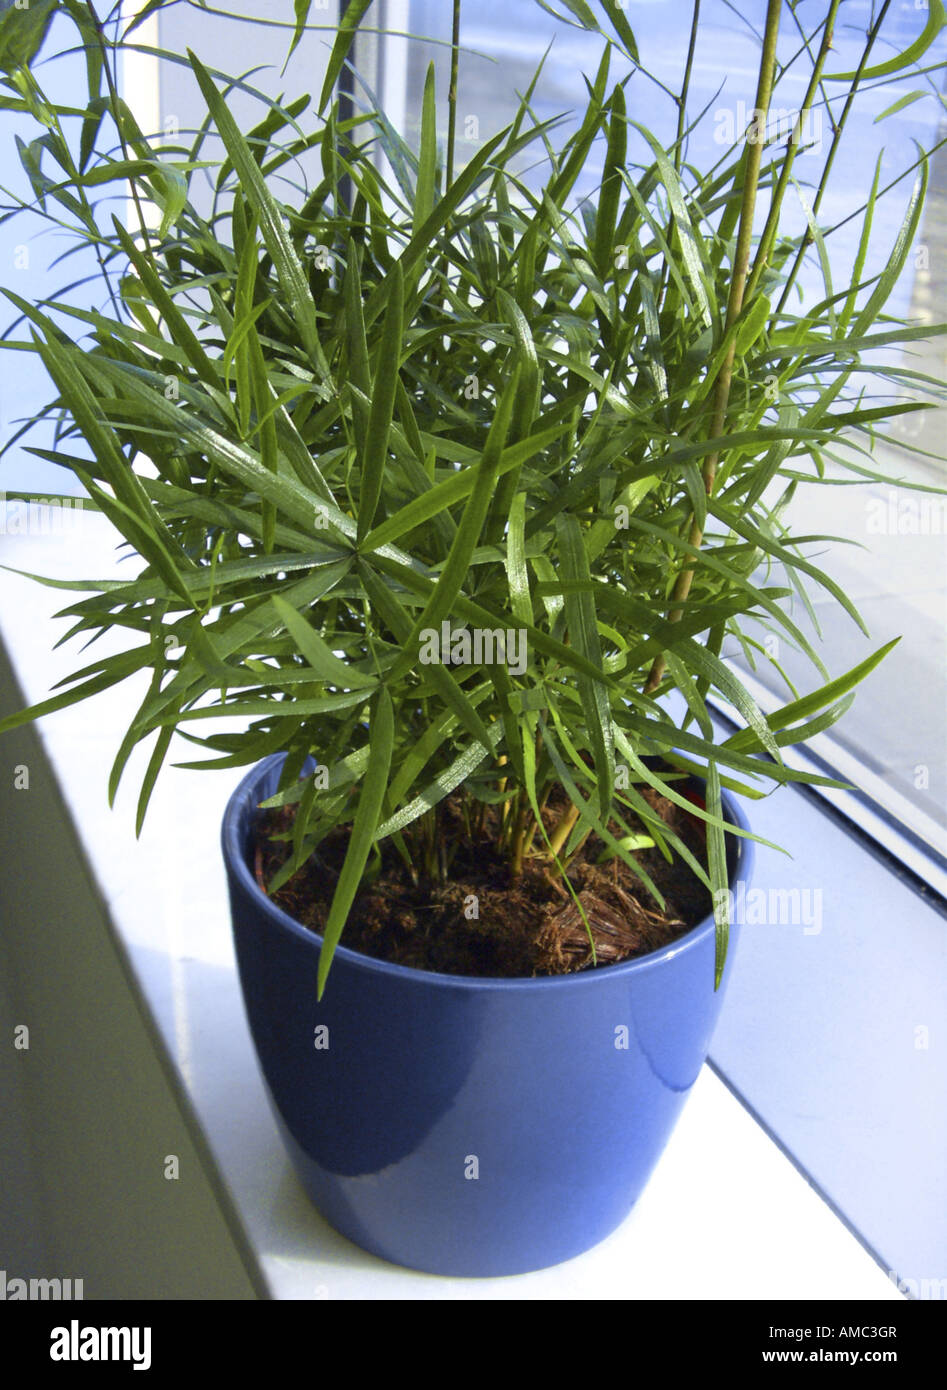 Sickle Thorn Asparagus, Asparagus fern (Asparagus falcatus), potted plant Stock Photo